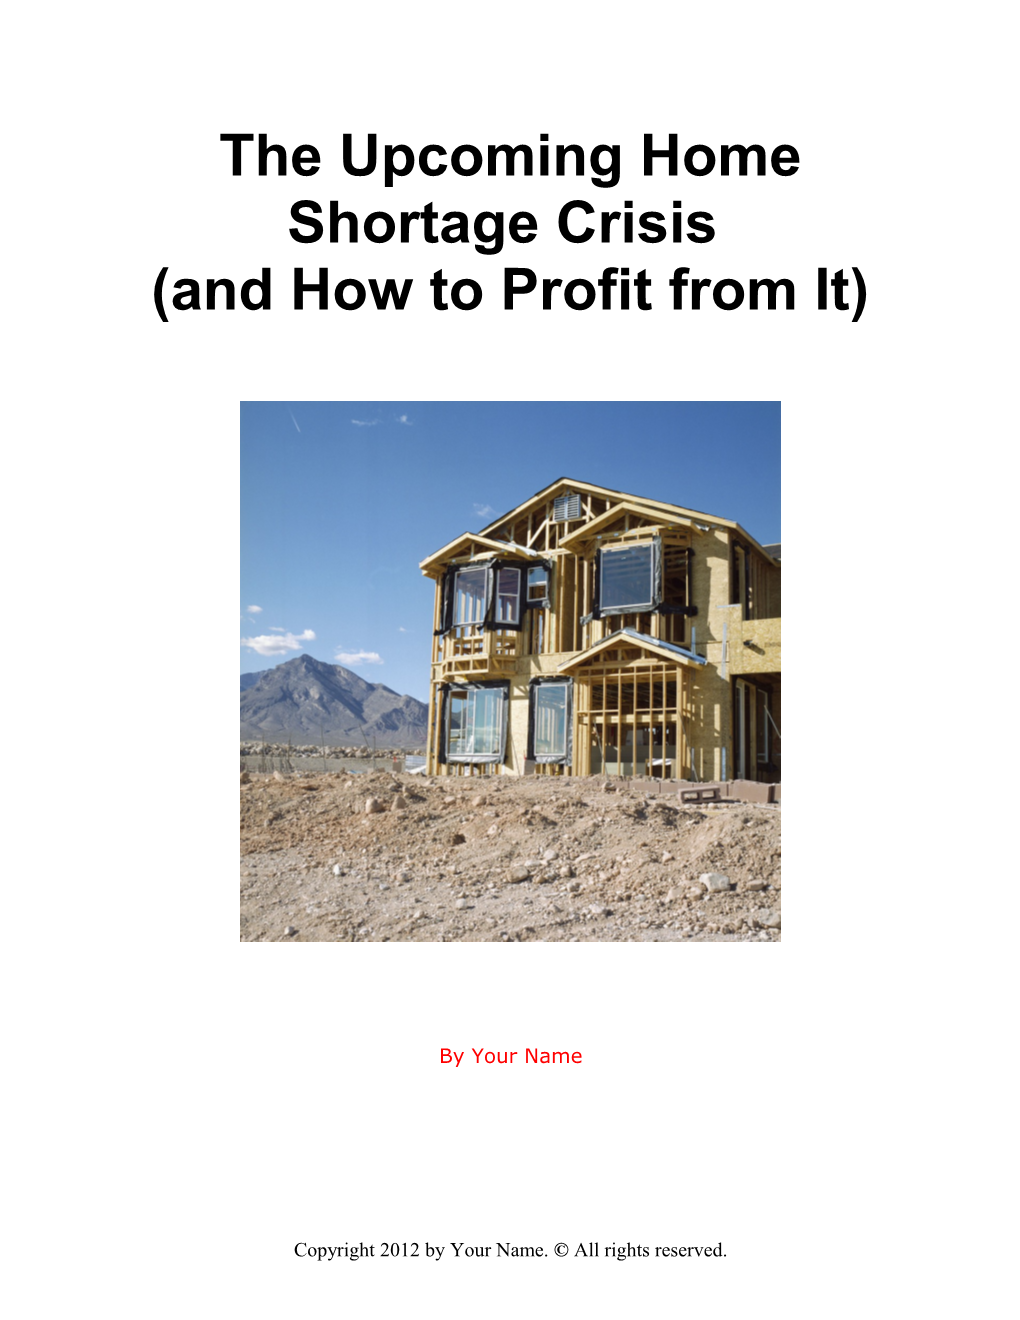 The Upcoming Home Shortage Crisis